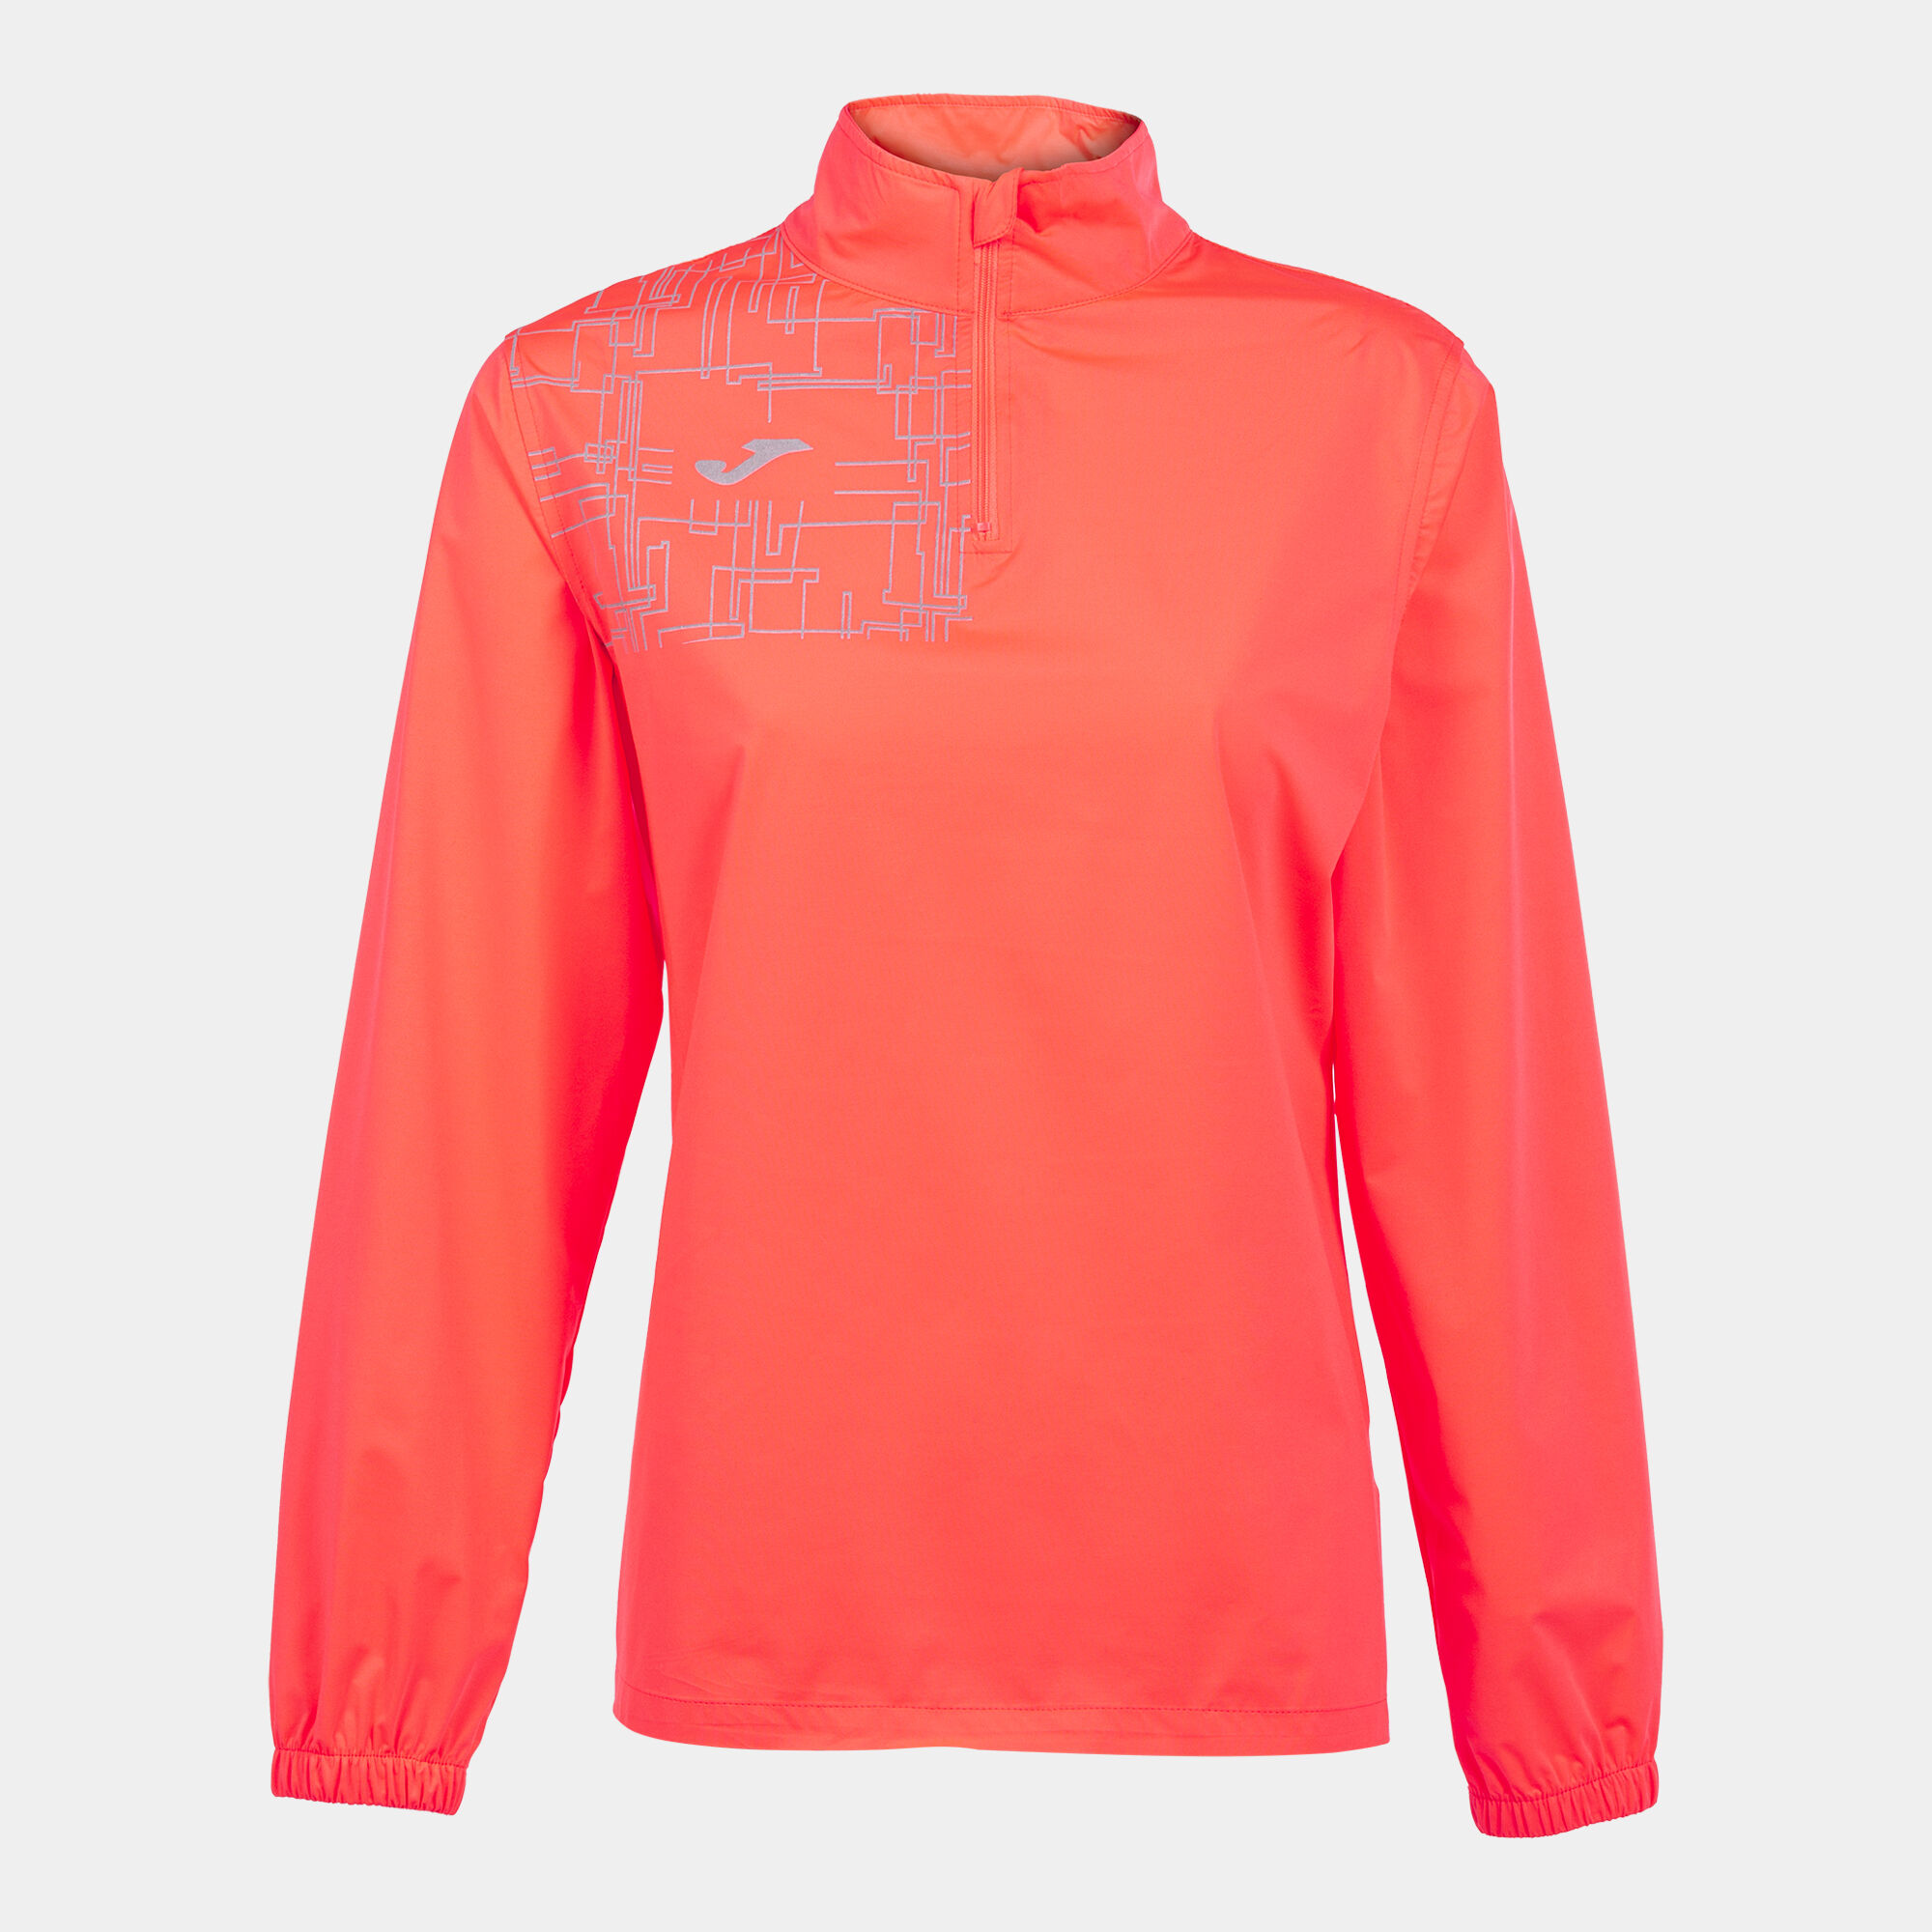 Sweatshirt woman Elite VIII fluorescent coral